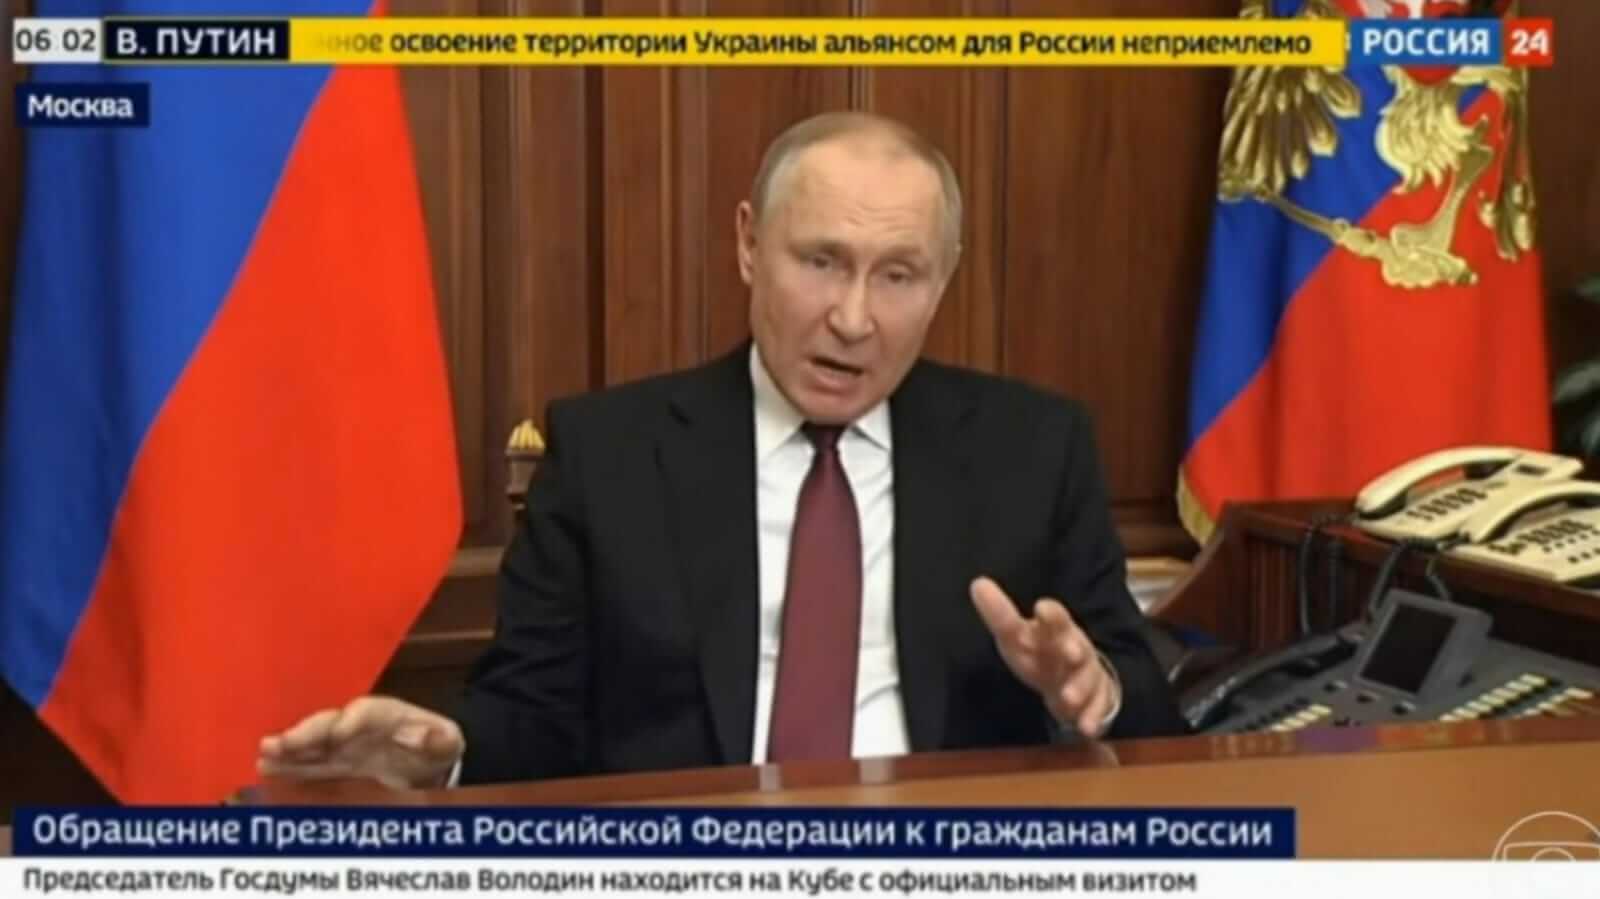 Putin declara ataque a Ucrânia